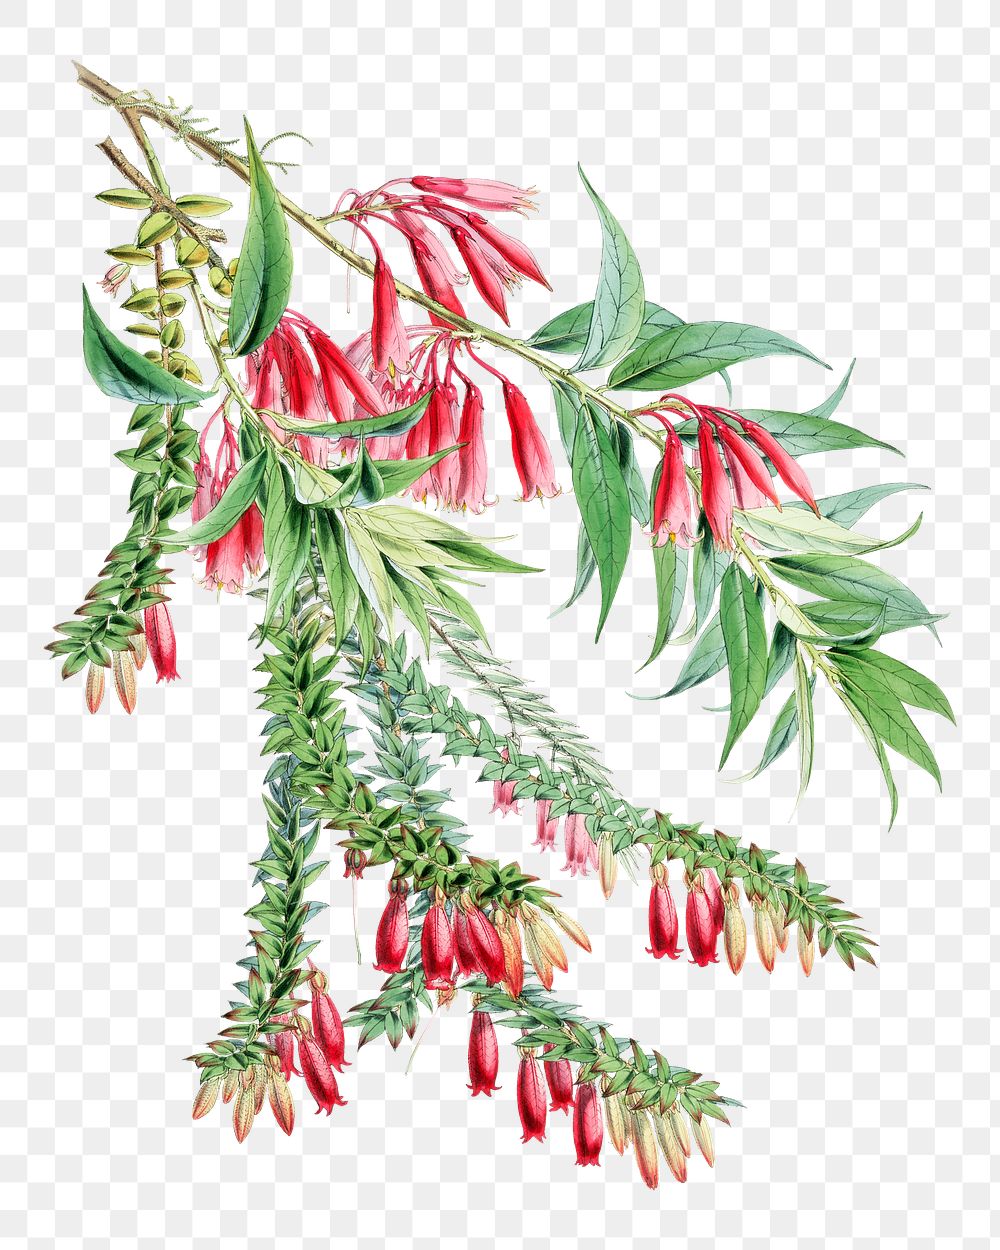 Vaccinium Salignum and Vaccinium Serpens flower png sticker, transparent background, vintage Himalayan plants illustration. …